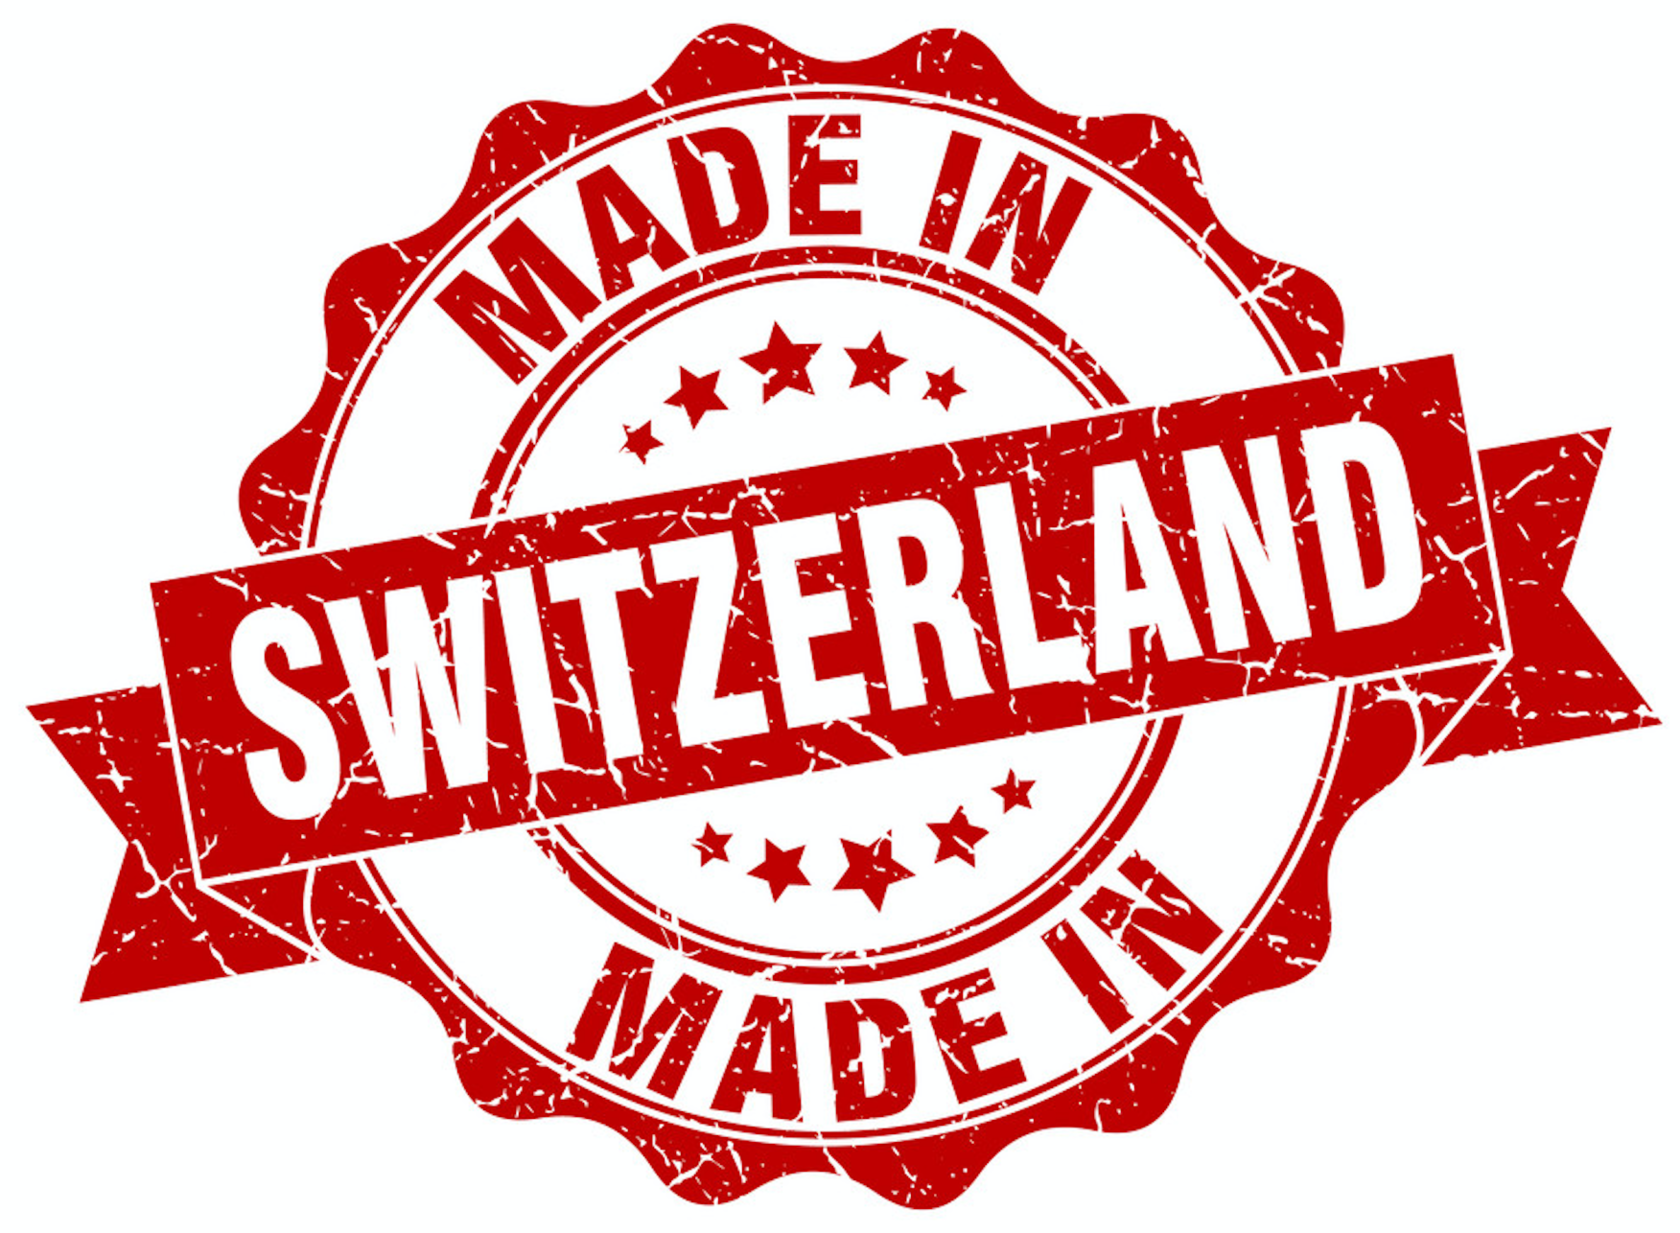 Маде ин румыния. Made in Швейцария. Печать made in. Сделано в Швейцарии. Швейцарское качество.